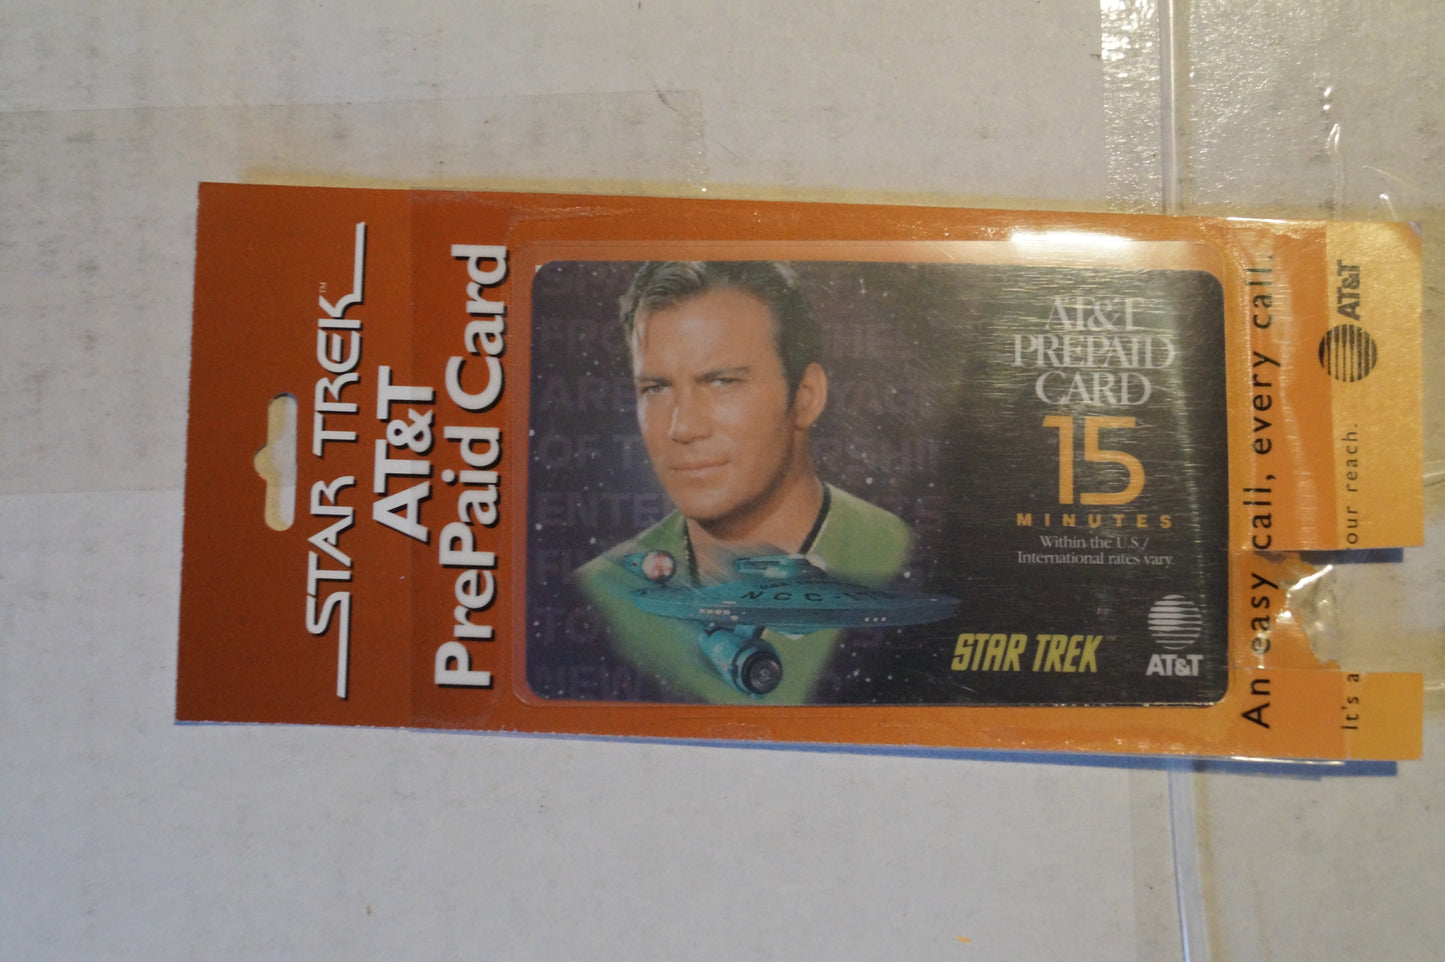 Star Trek AT&T collectible phone card